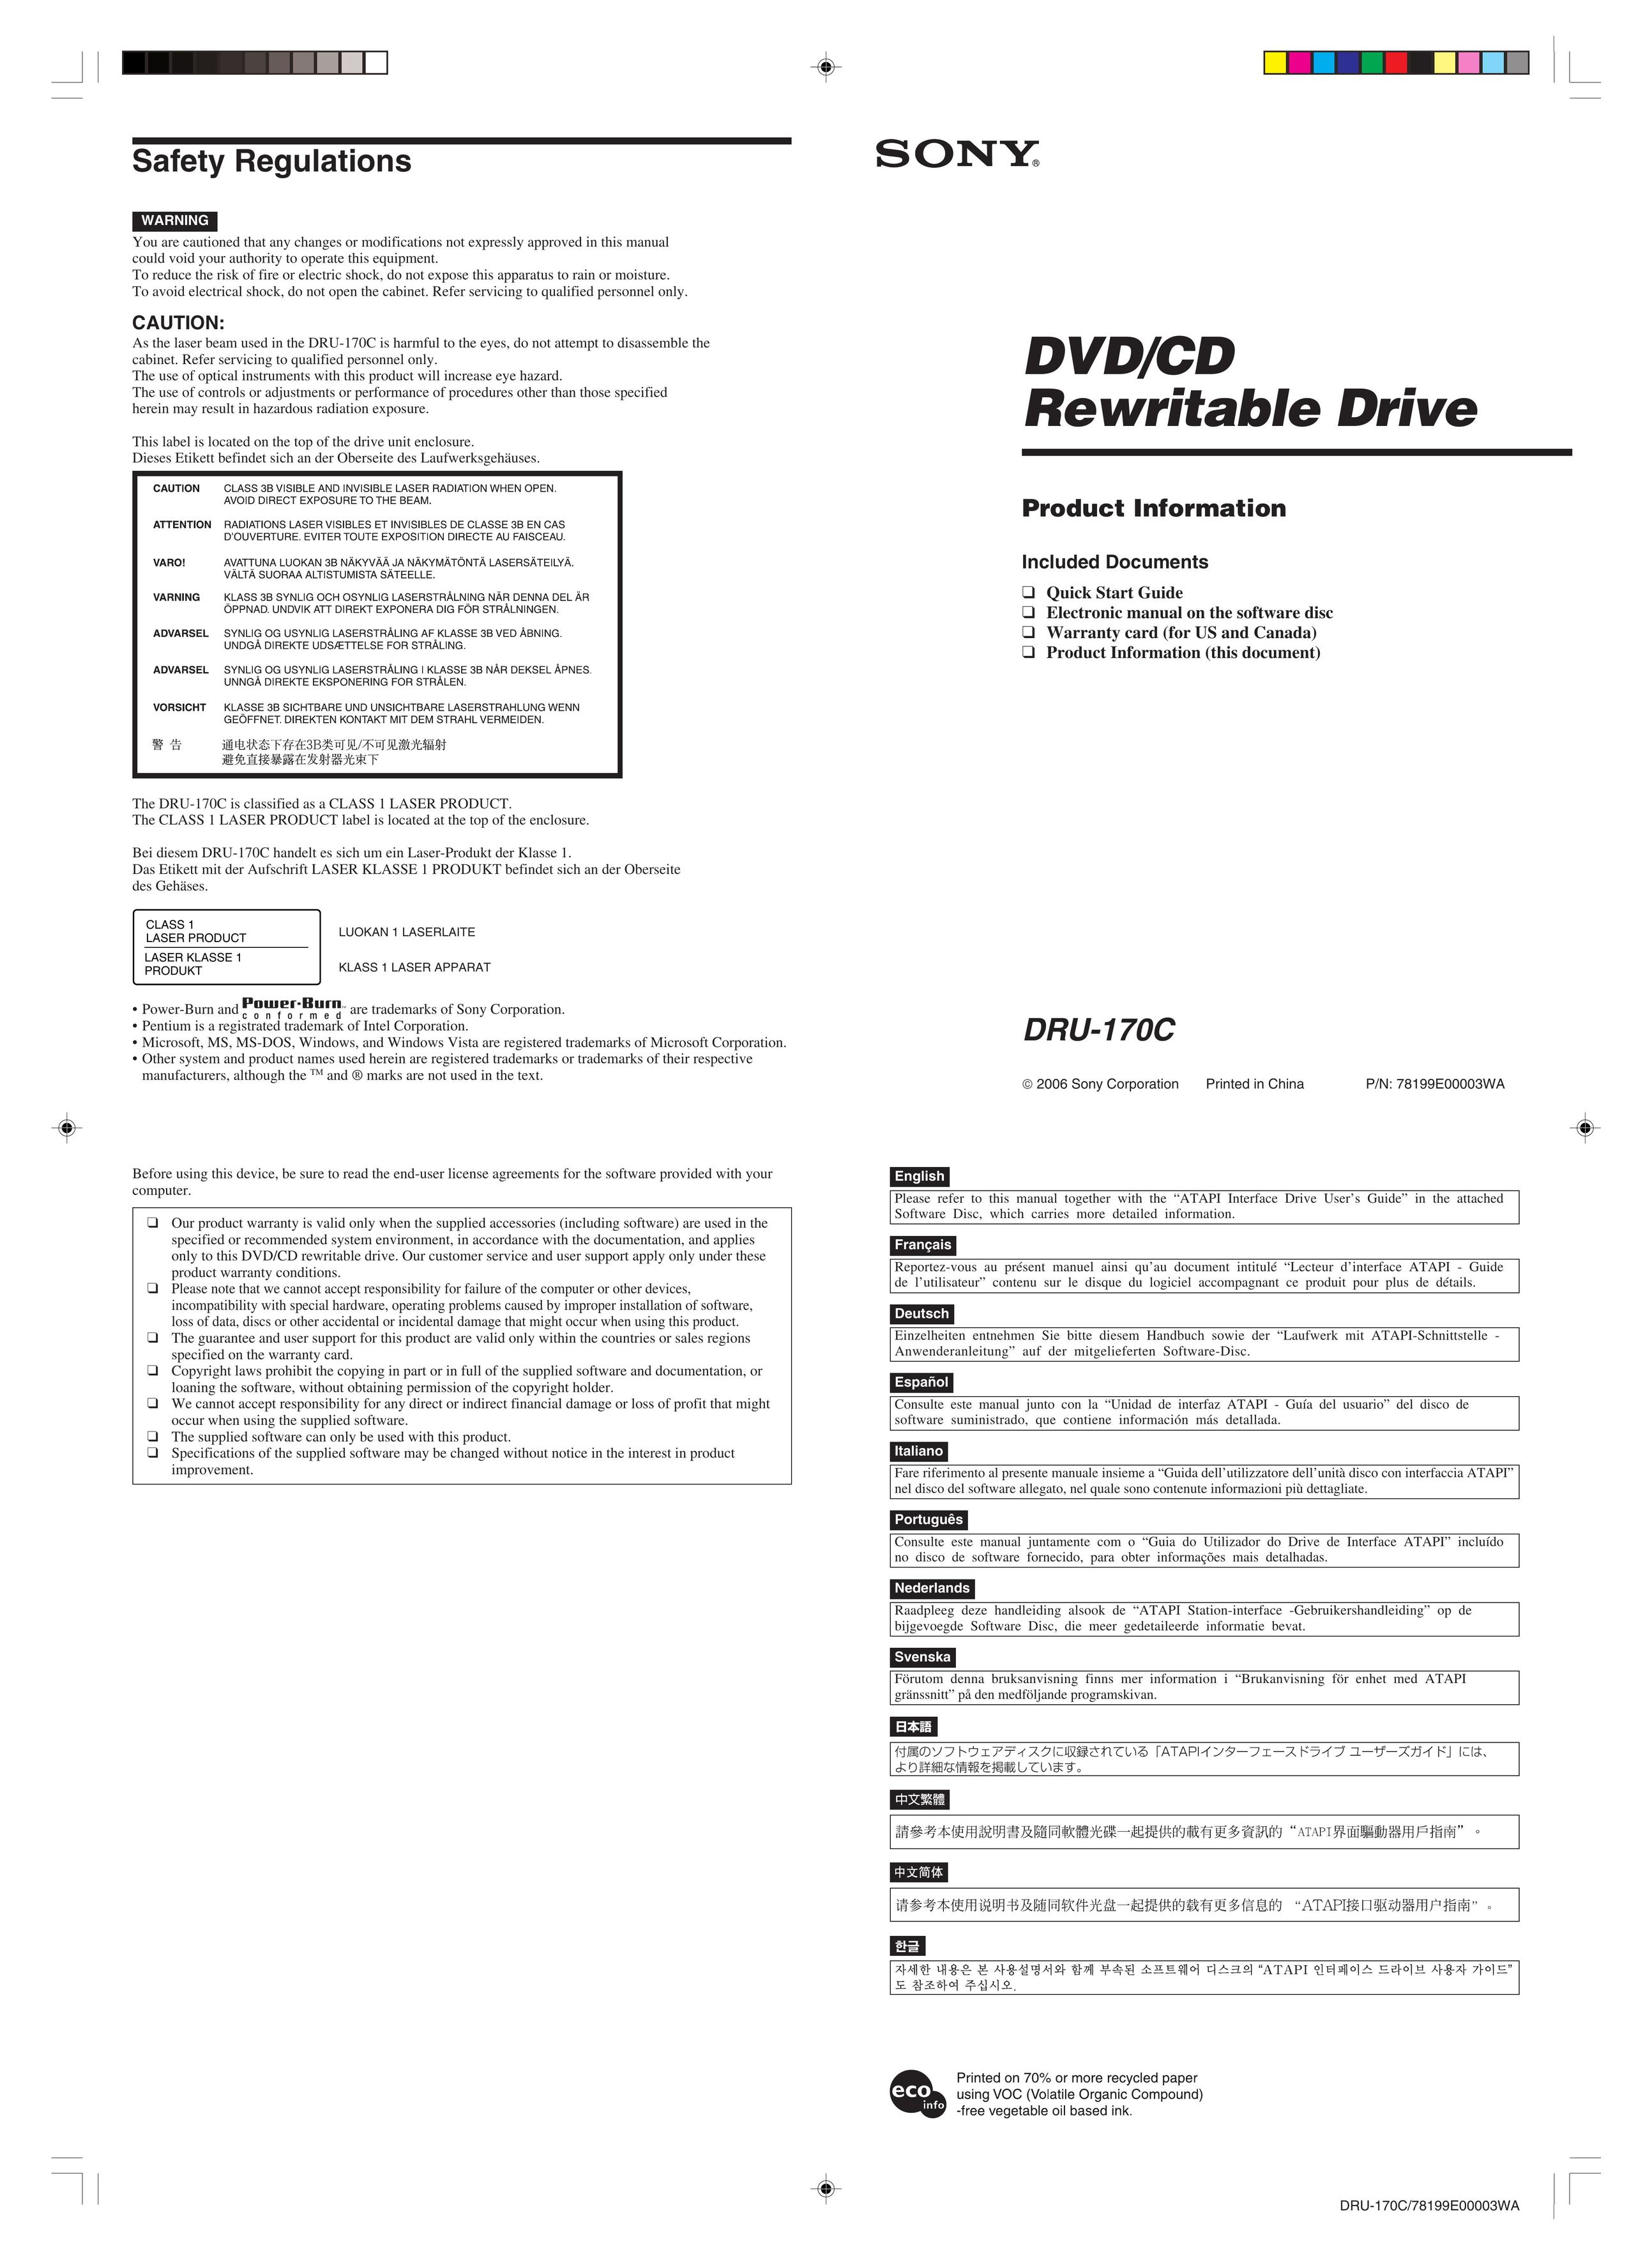 Sony DRU170C Computer Drive User Manual